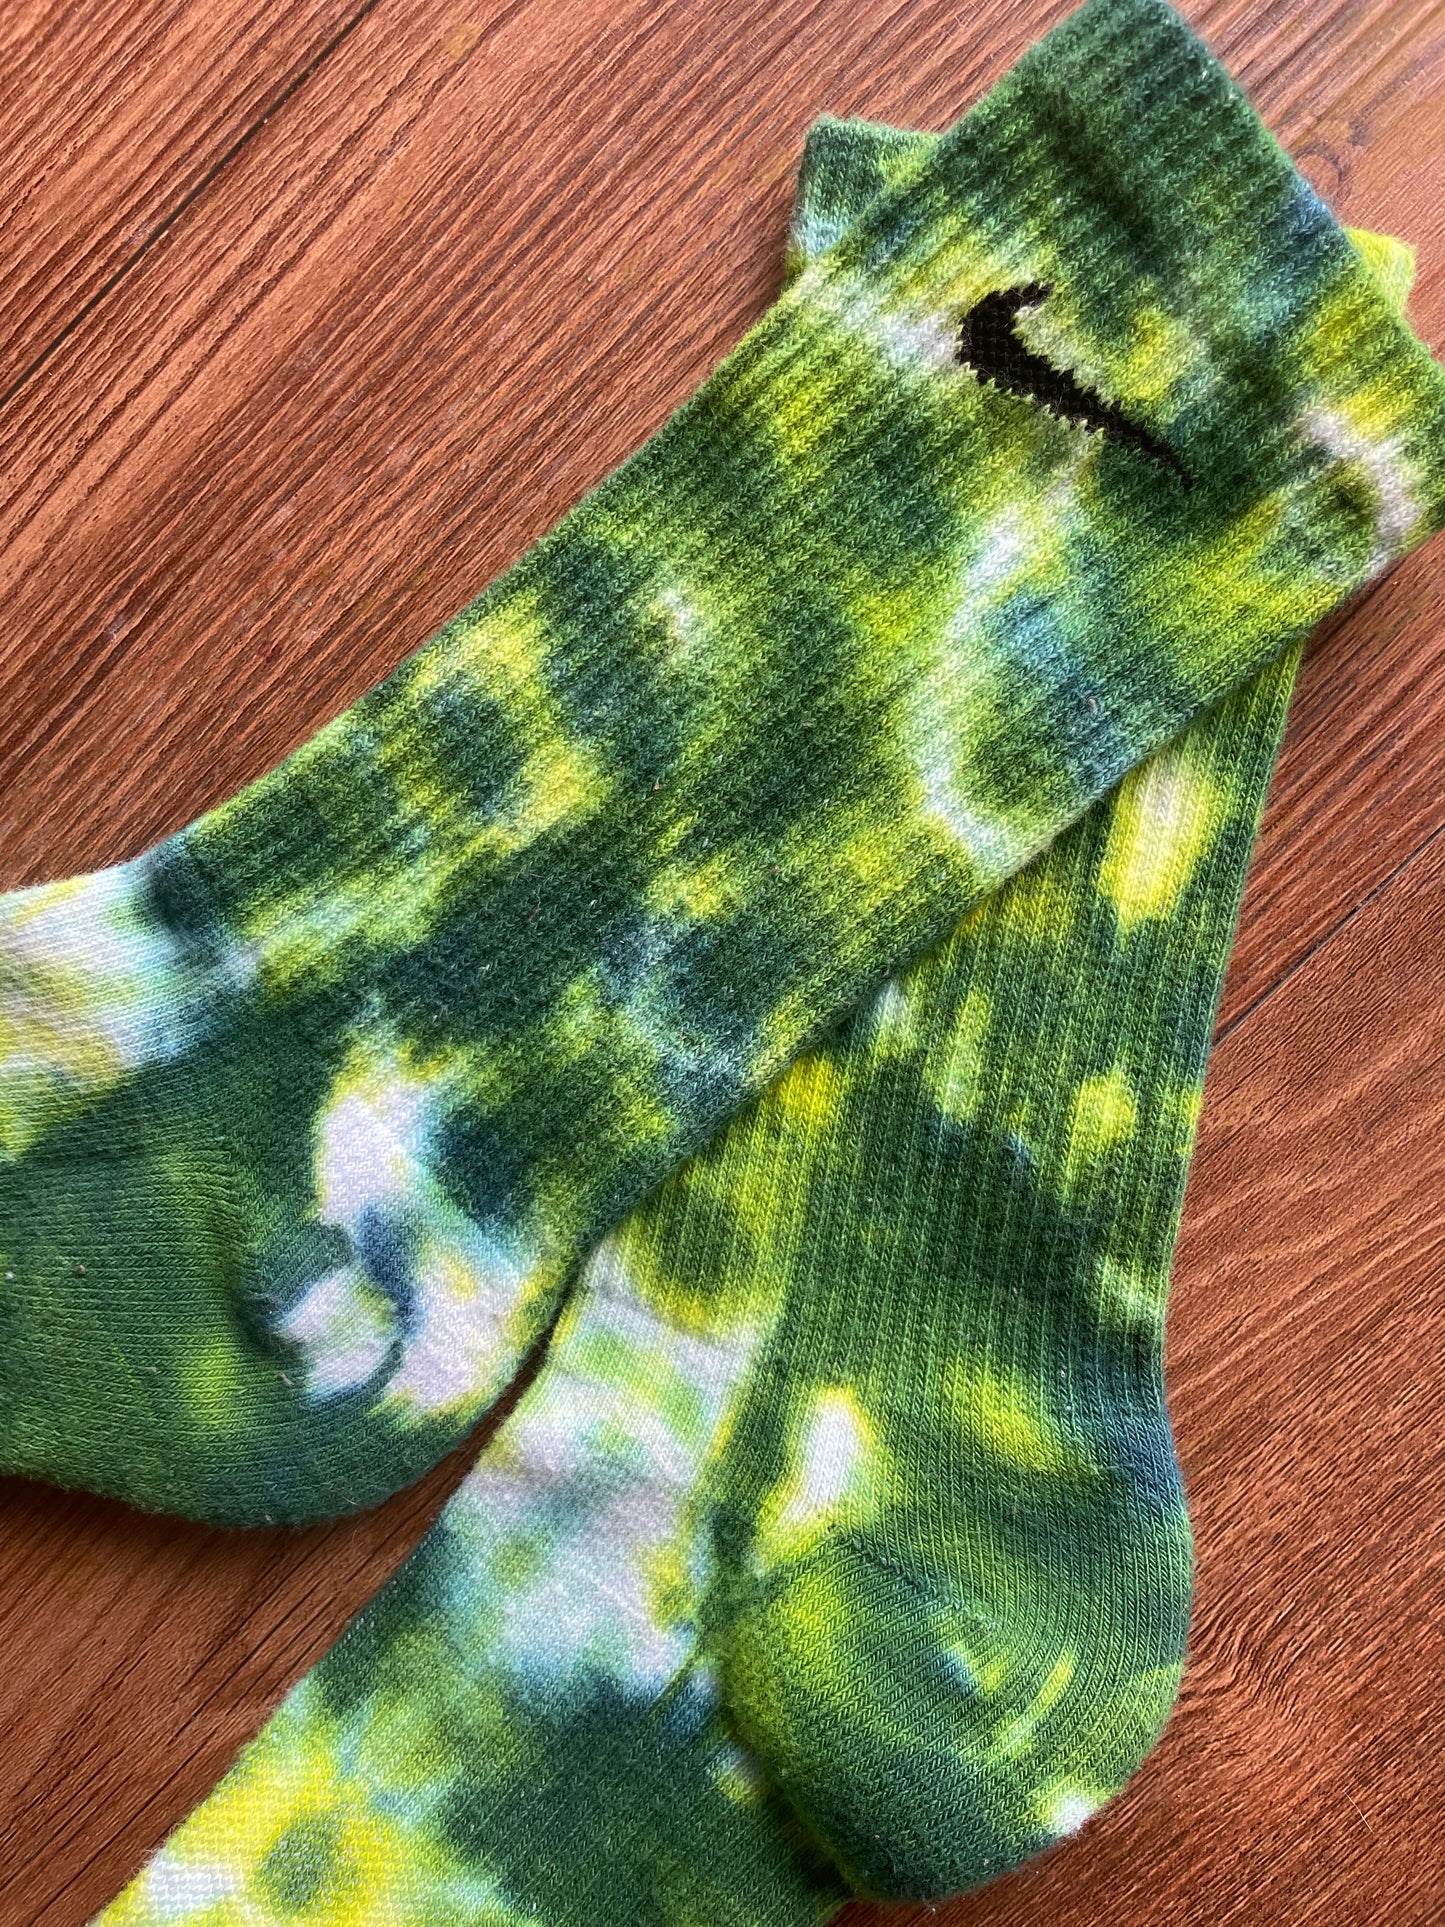 Bright Green, Blue, and White Tie Dye Nike Dri-FIT Training Socks - Size Medium (Men's 6-8/Women's 7-10)